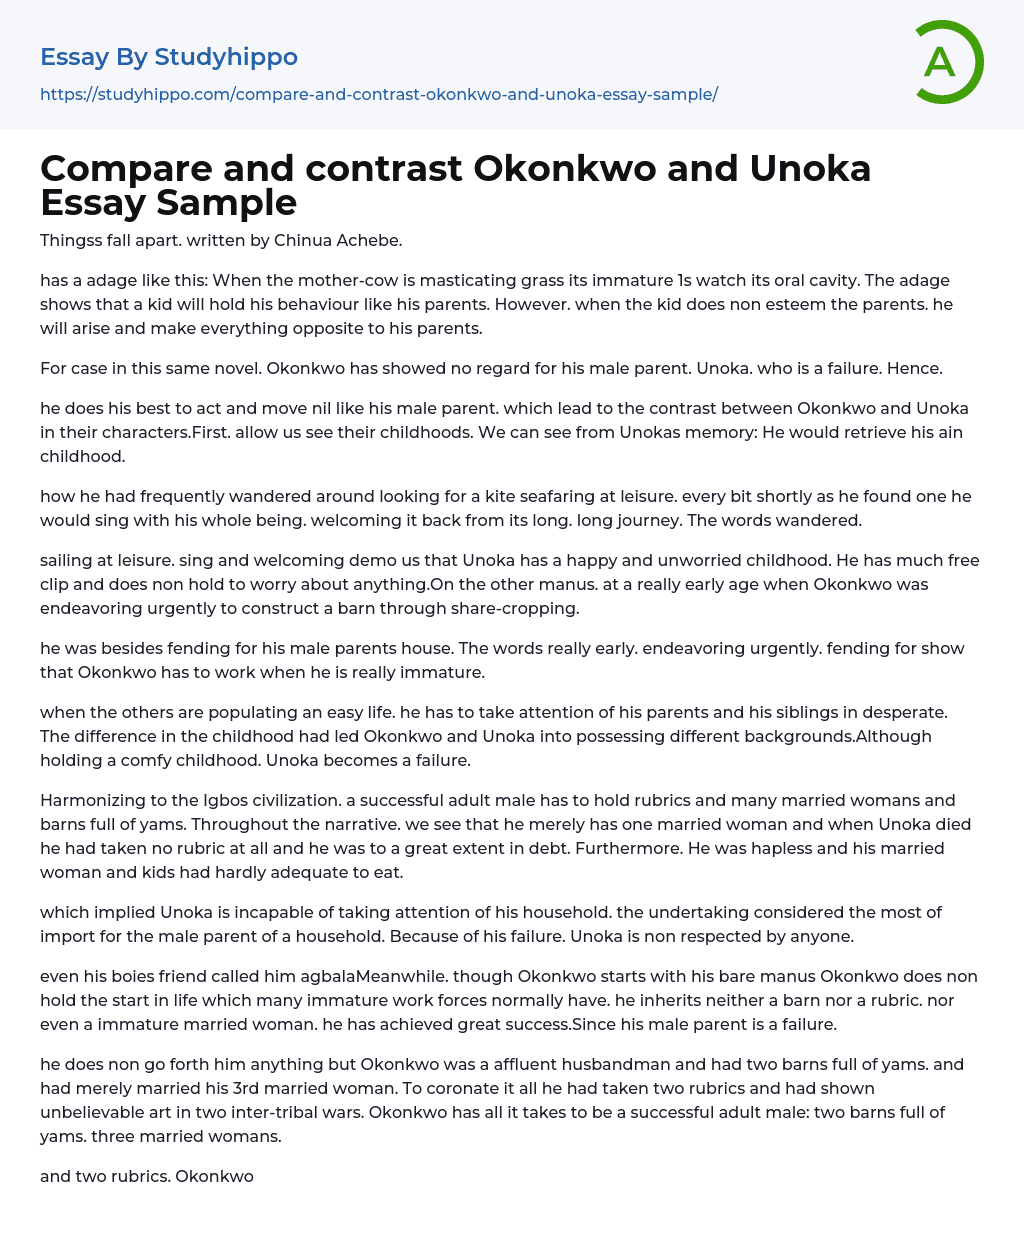 Compare and contrast Okonkwo and Unoka Essay Sample